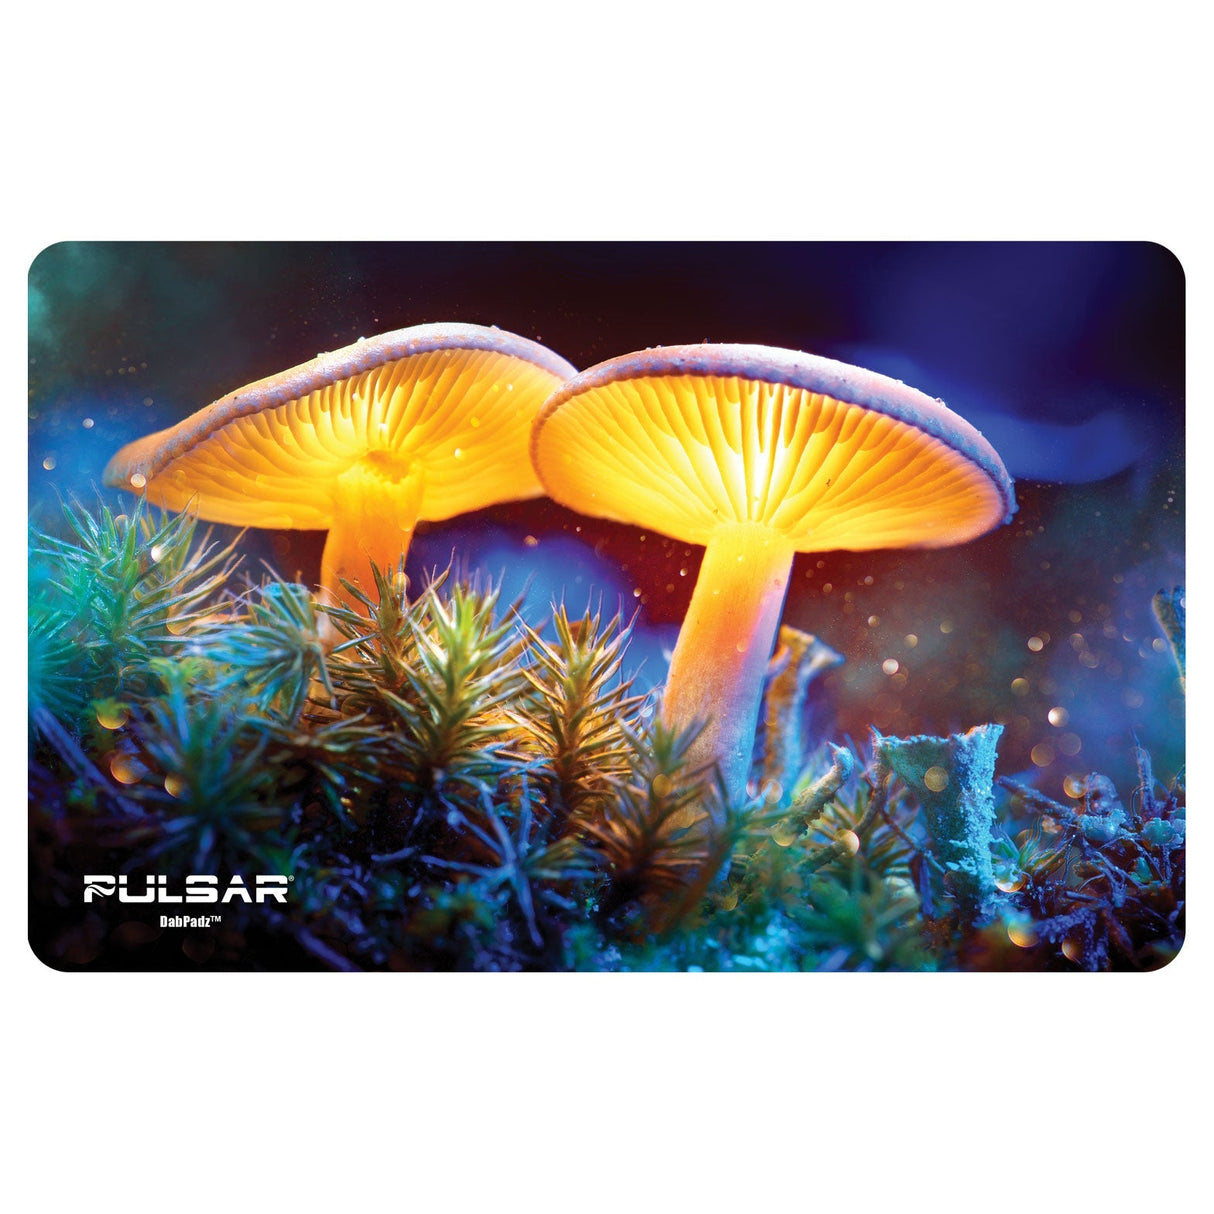 Pulsar DabPadz Dab Mat with vibrant mushroom design, non-slip rubber material, perfect for dab rigs